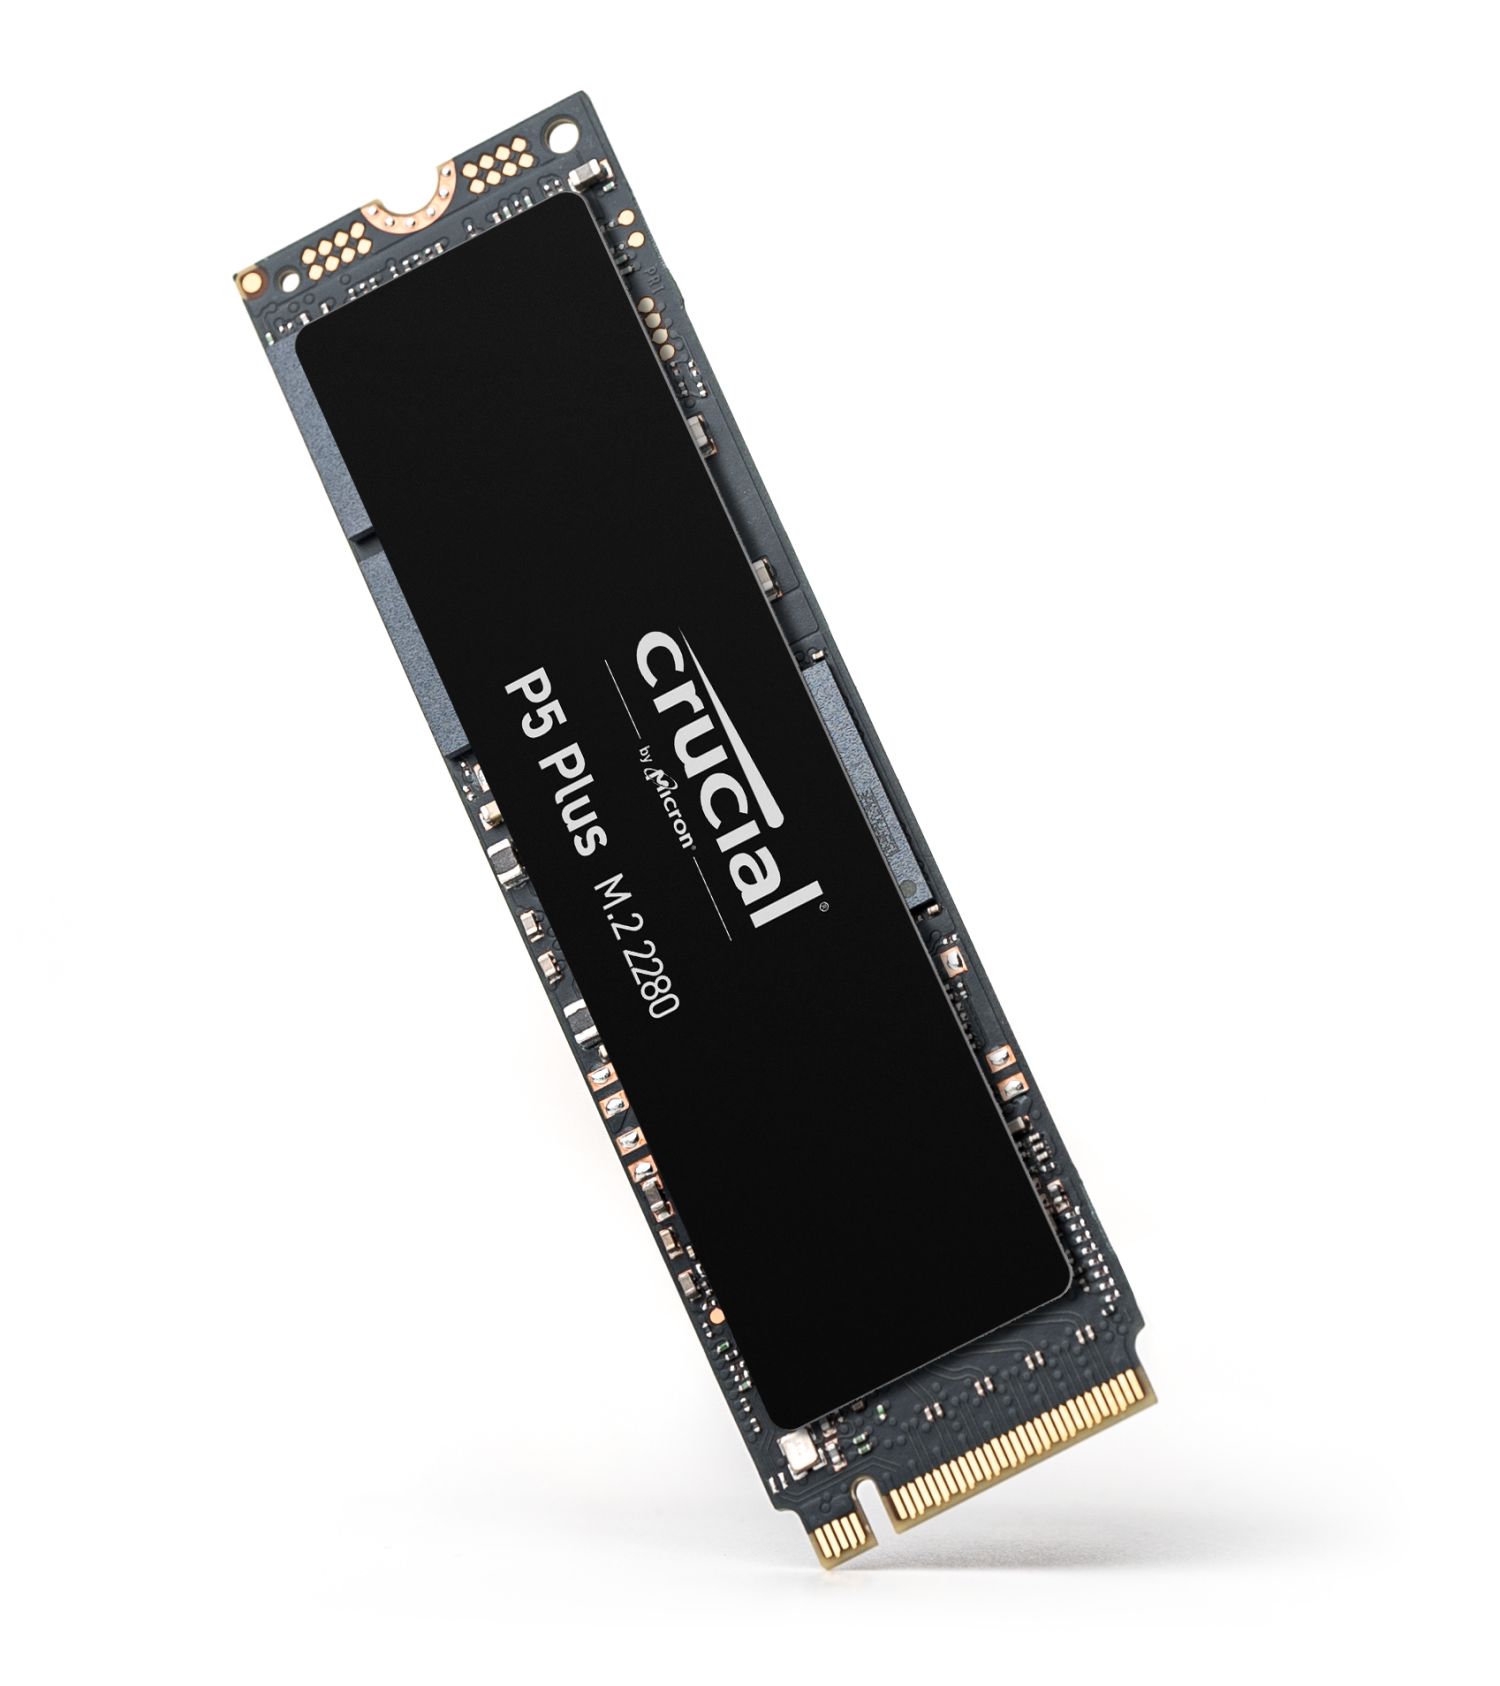 Crucial P5 Plus SSD (EN) | Crucial.com